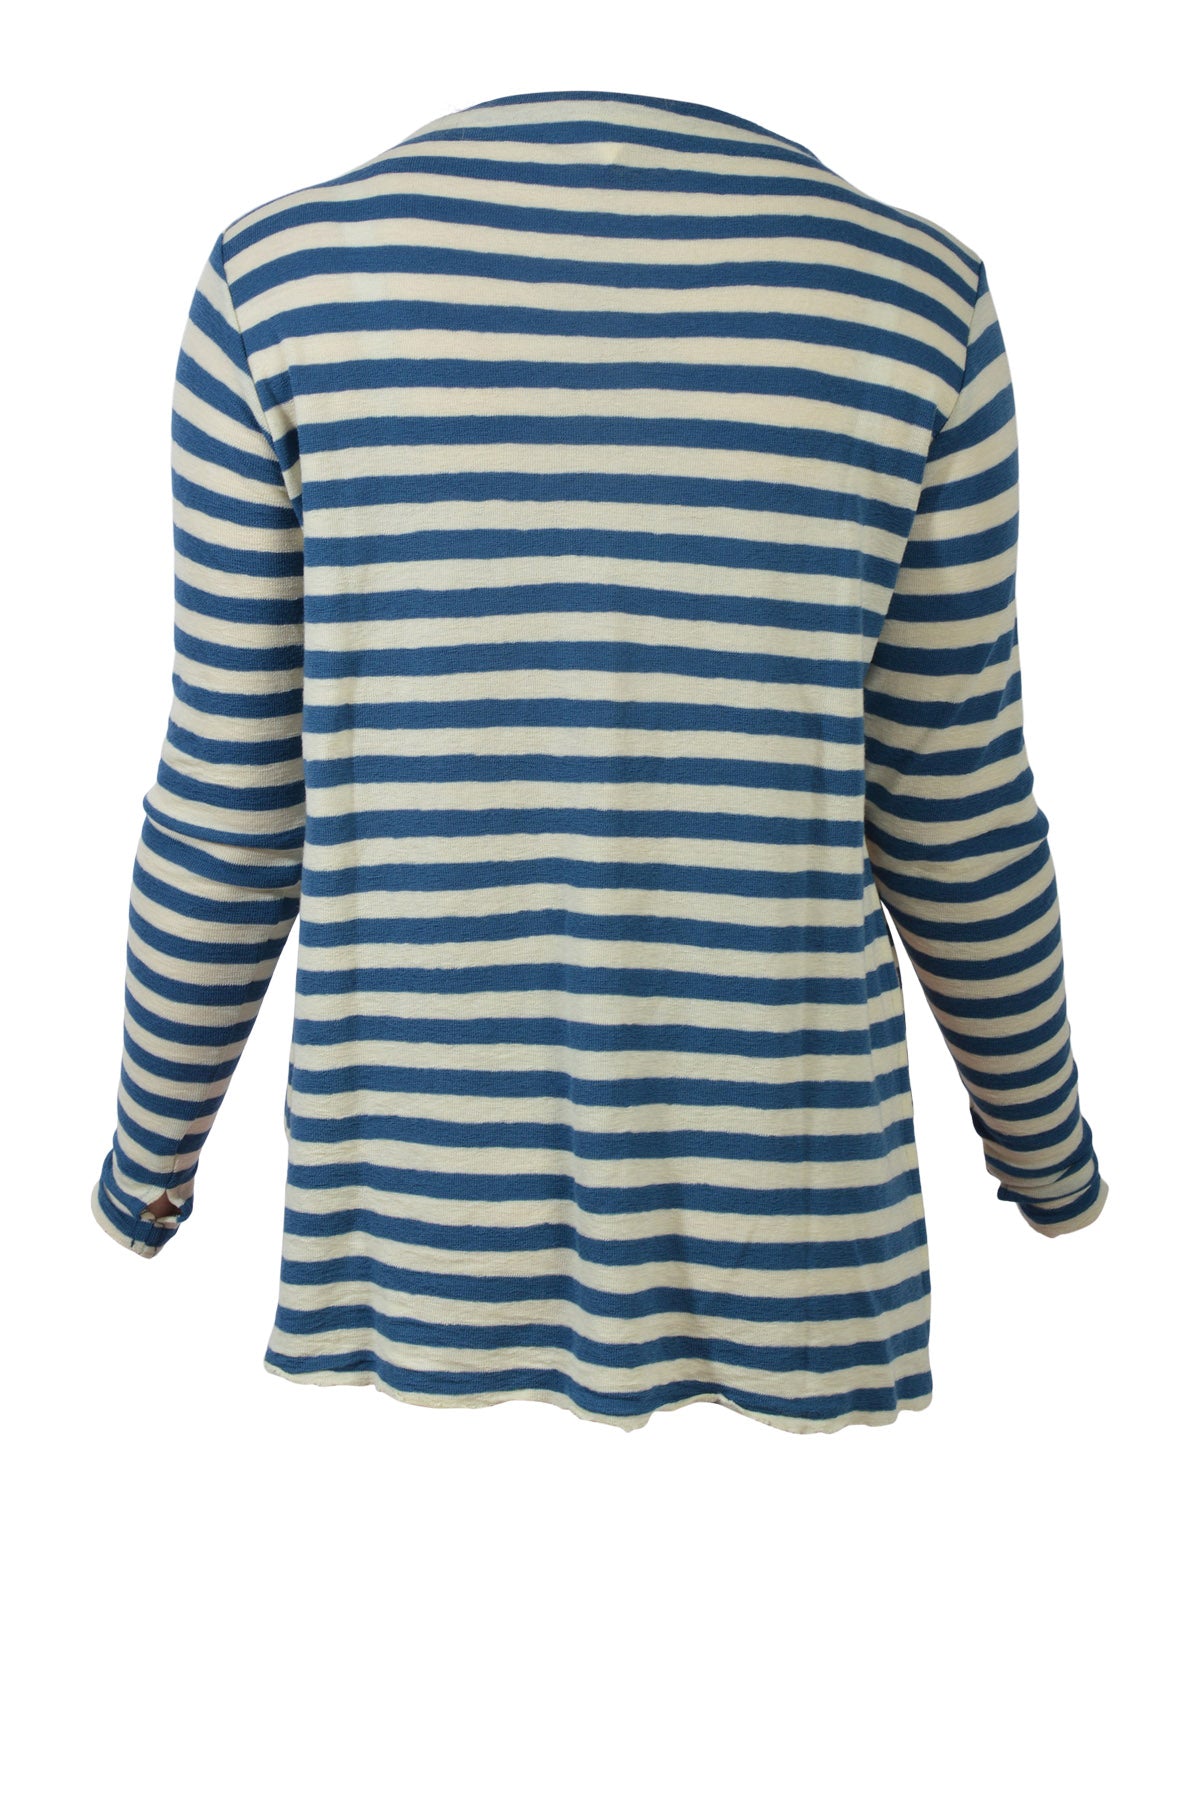 Blusbar by basic 4040 Shirt L/S w/high neck & slits, Raw White / Denim Blue